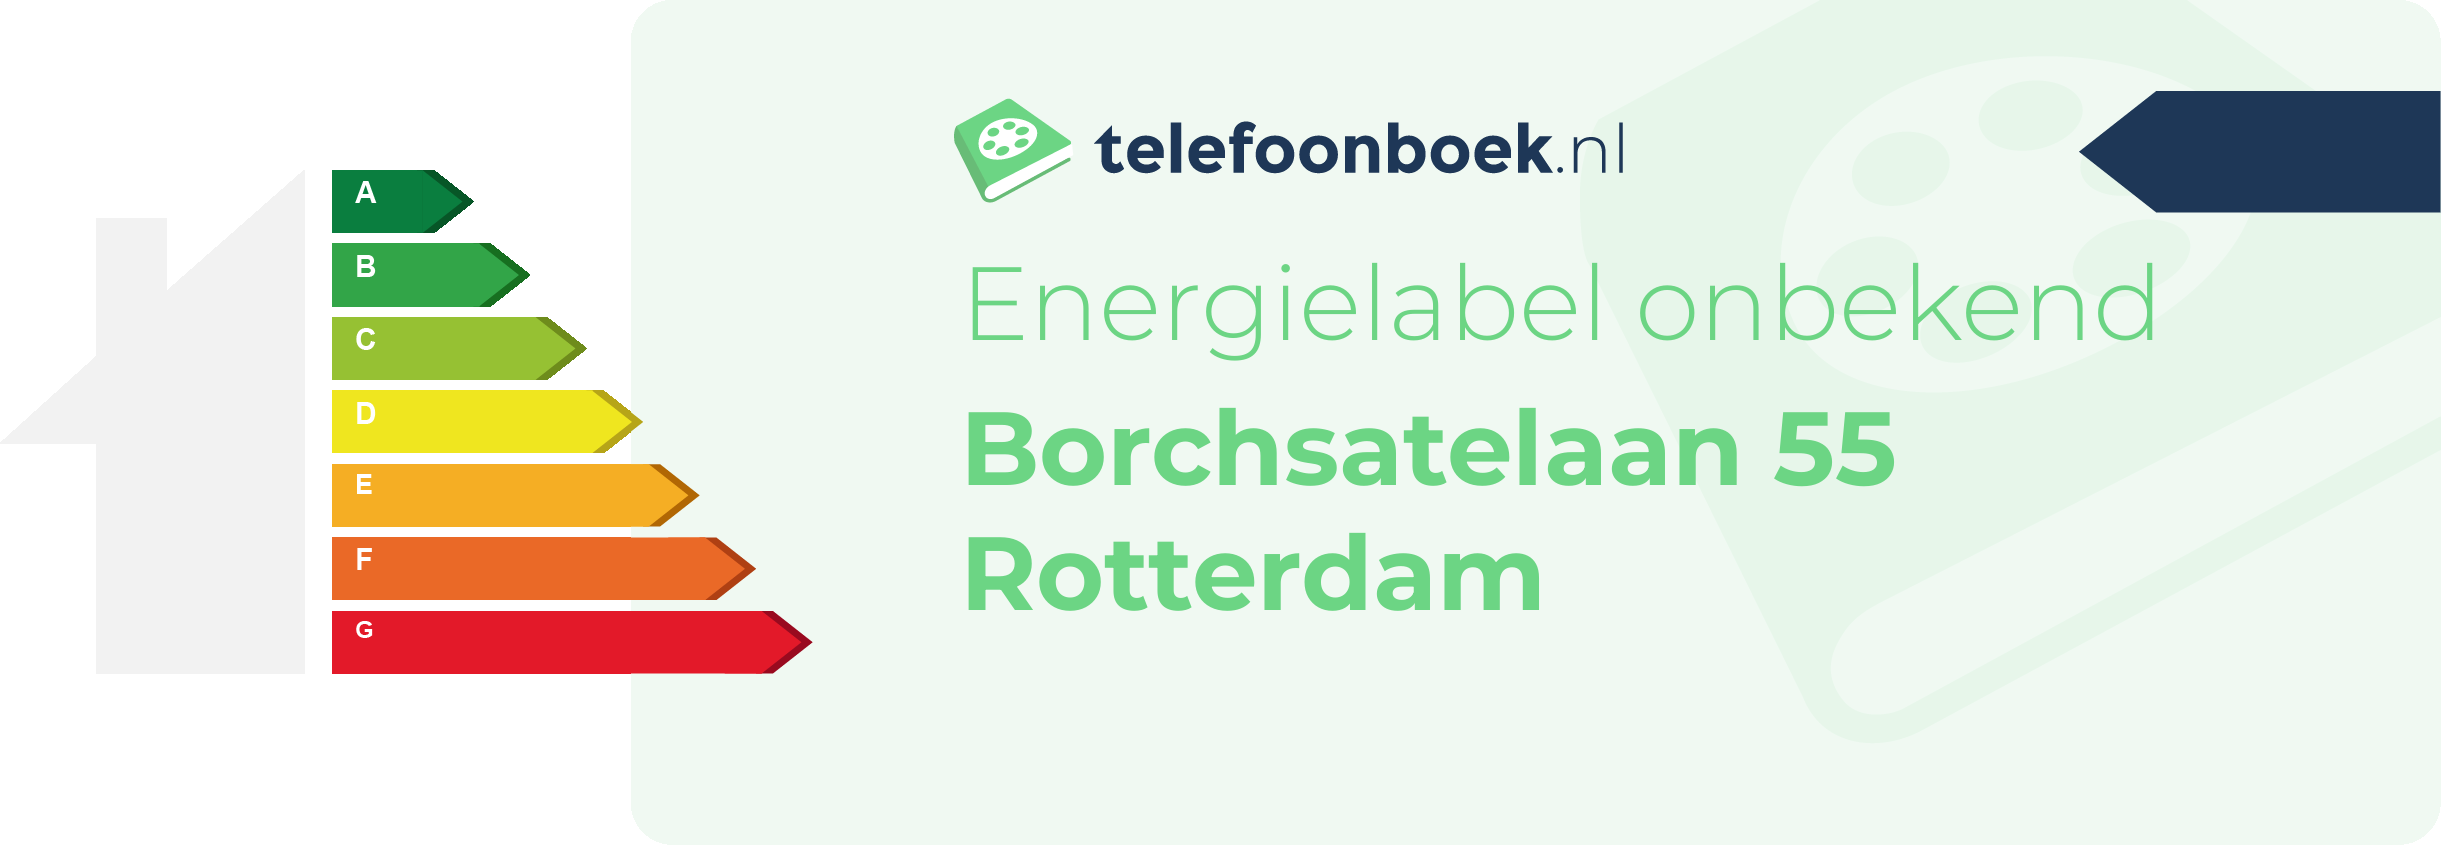 Energielabel Borchsatelaan 55 Rotterdam